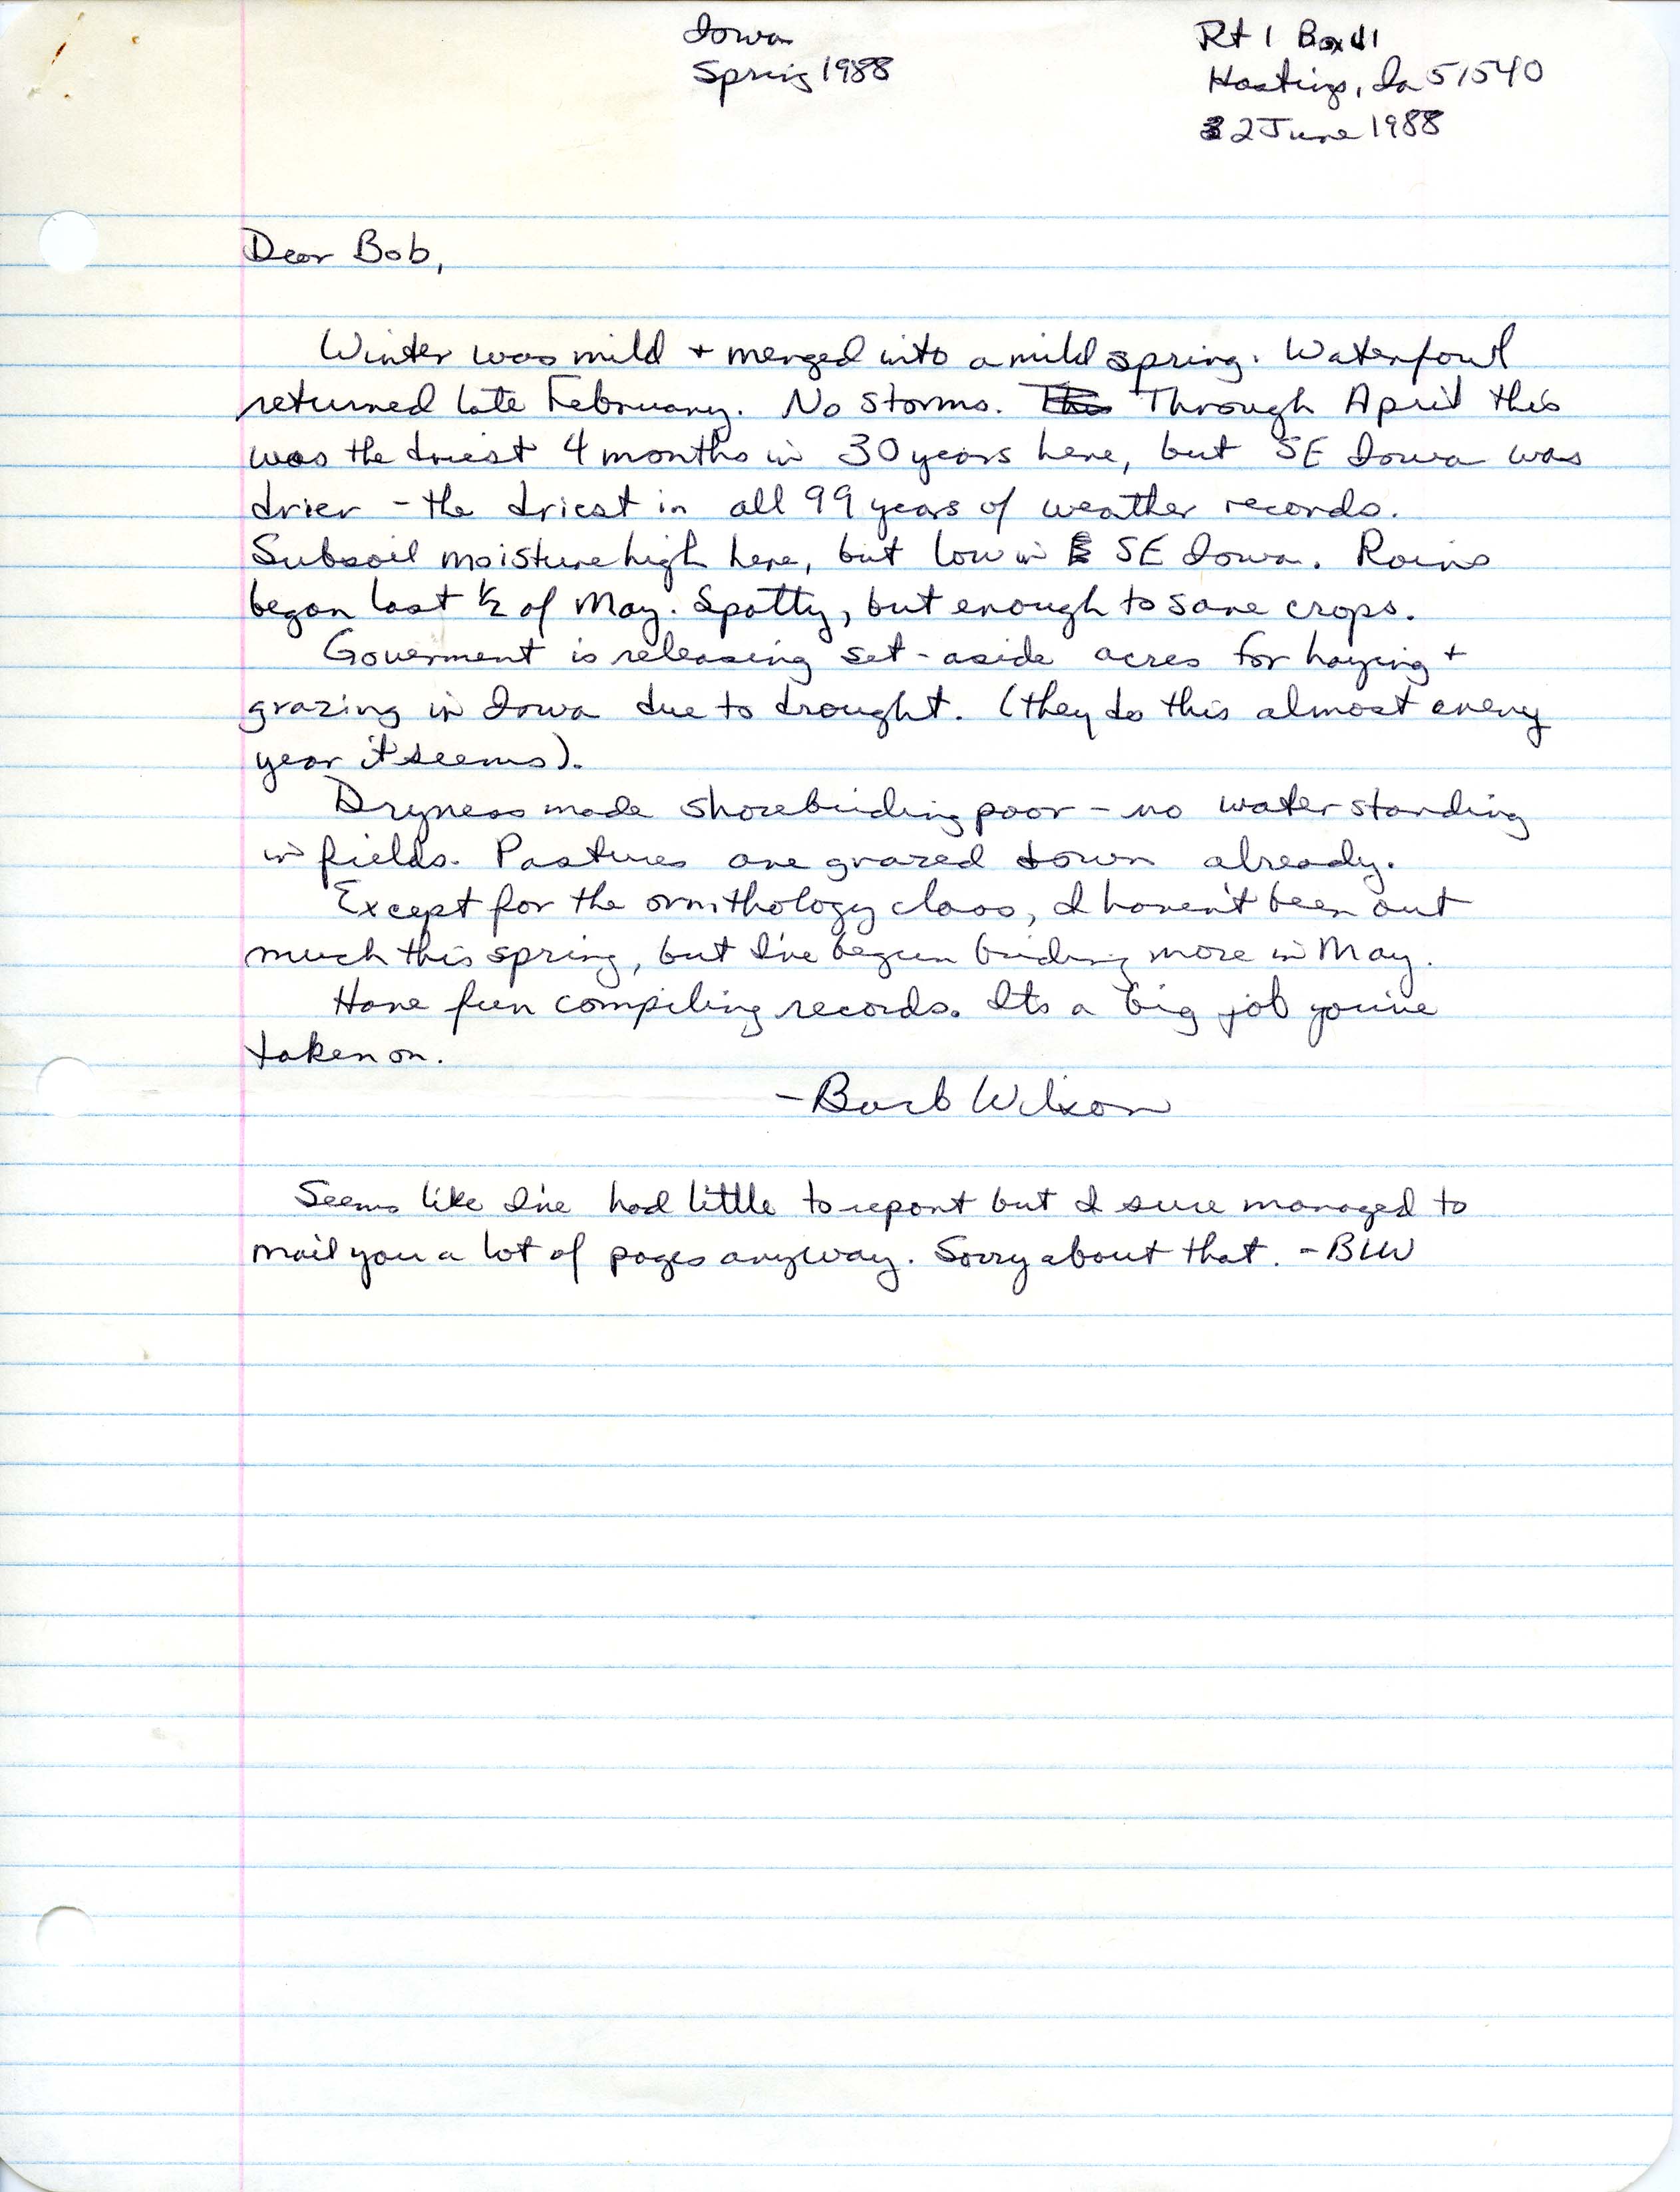 Barbara L. Wilson letter to Robert K. Myers regarding a weather report, June 2, 1988